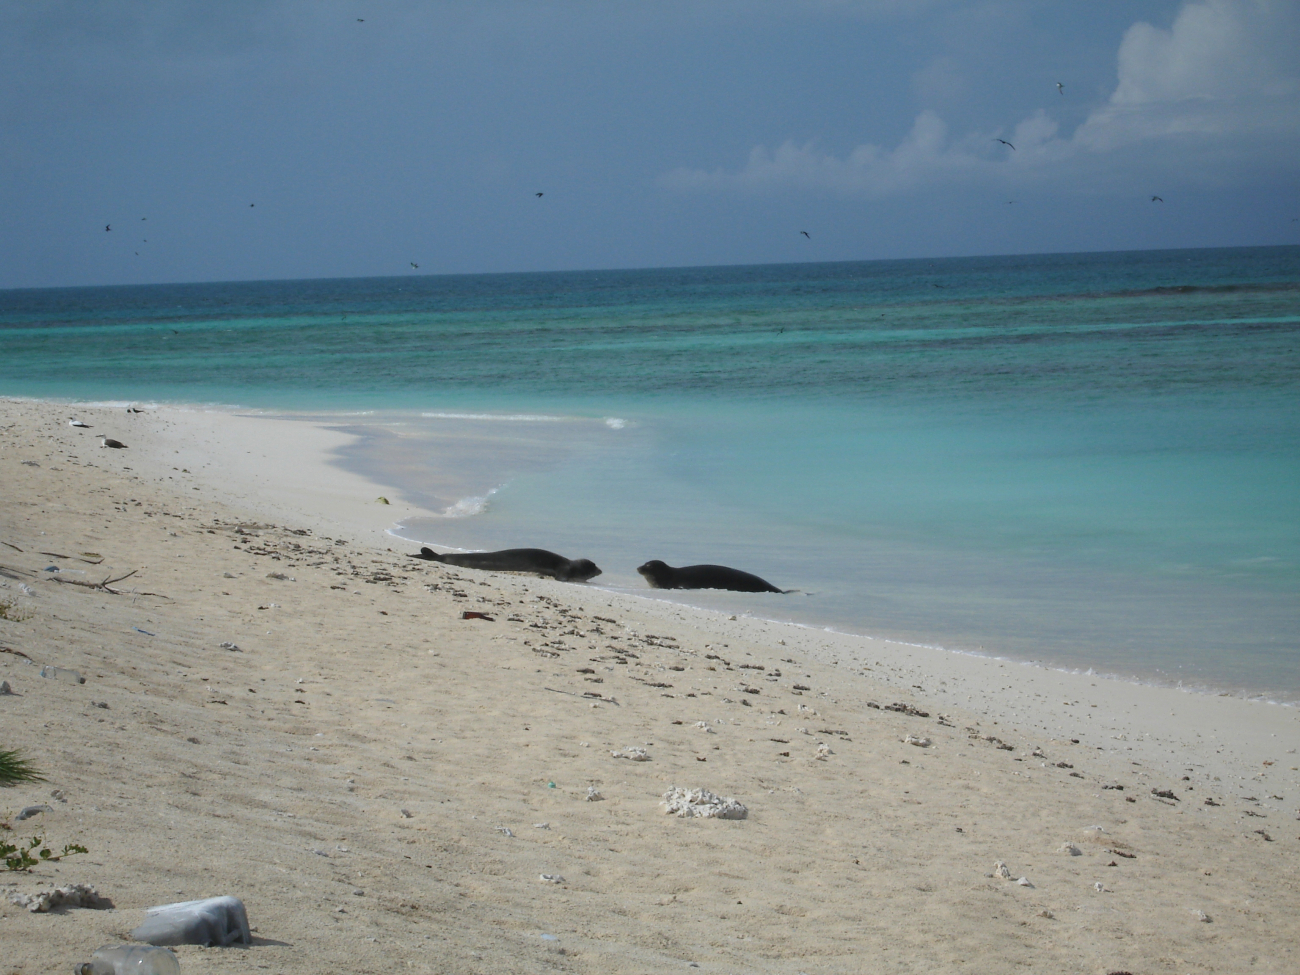 Monk seals on the beach